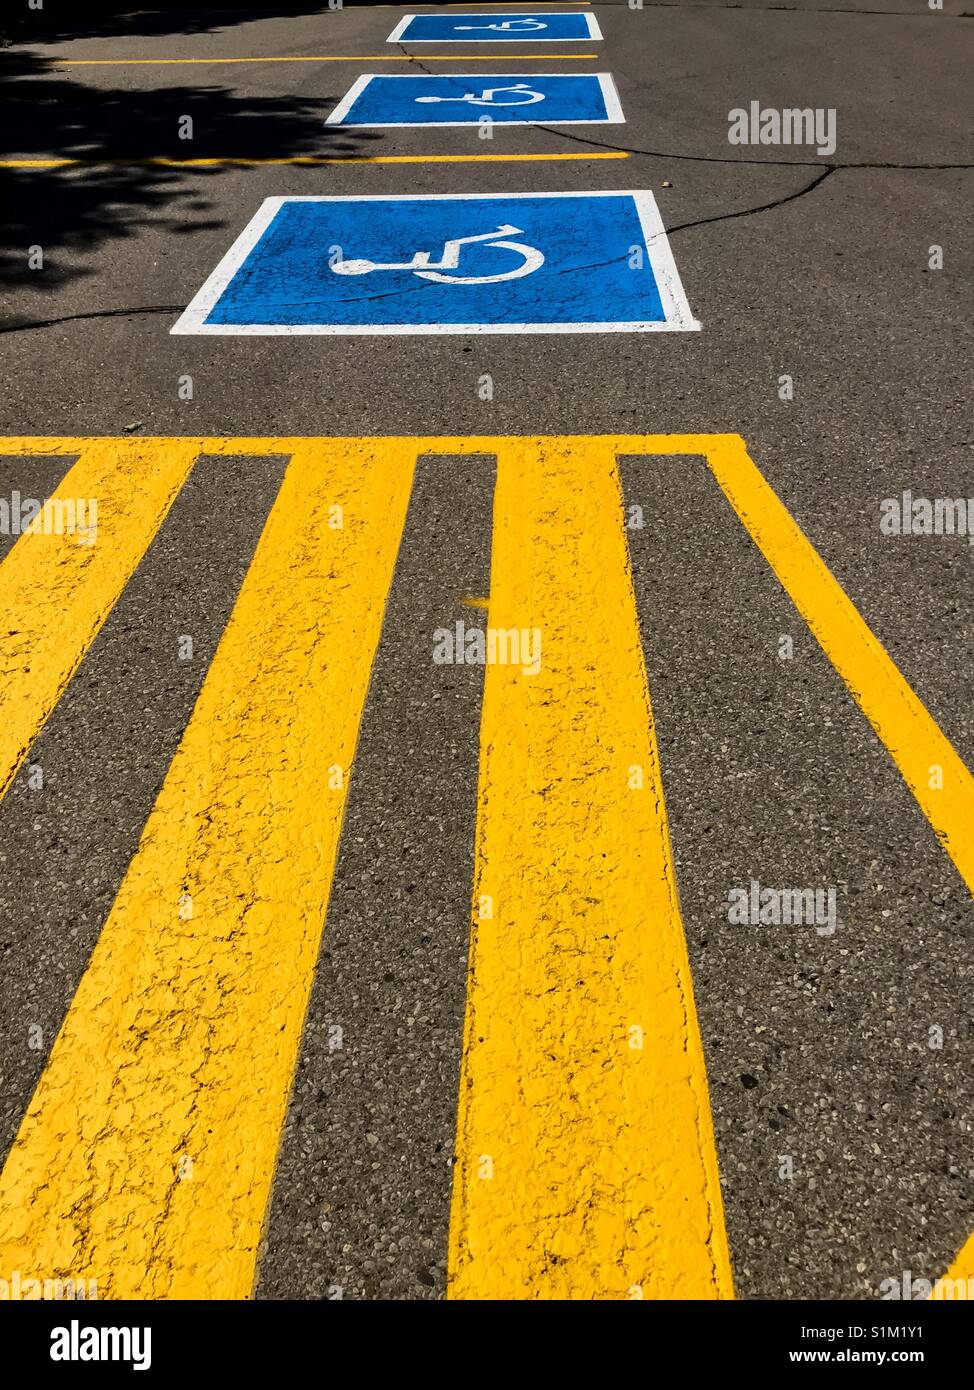 Three wheel chair parking spots Stock Photo